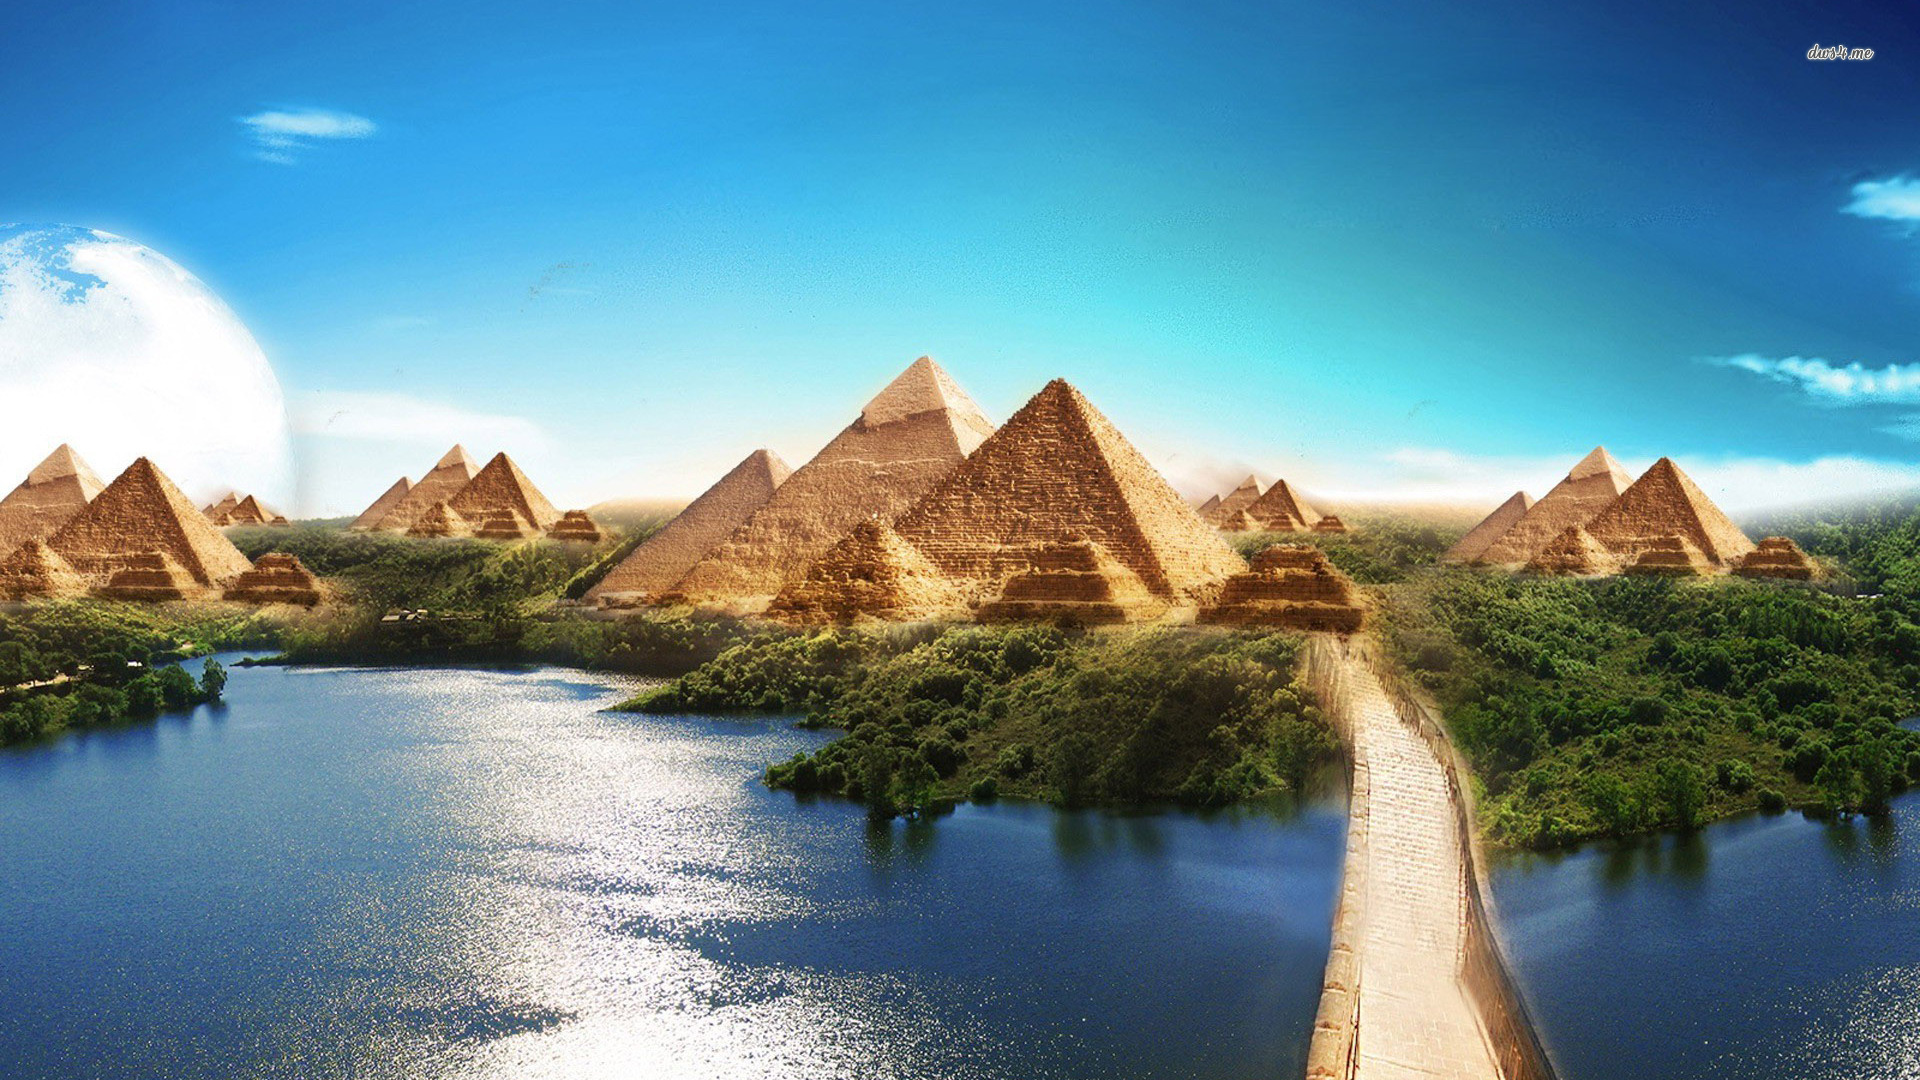 Pyramids Wallpaper Wallpapersafari HD Wallpapers Download Free Images Wallpaper [wallpaper981.blogspot.com]